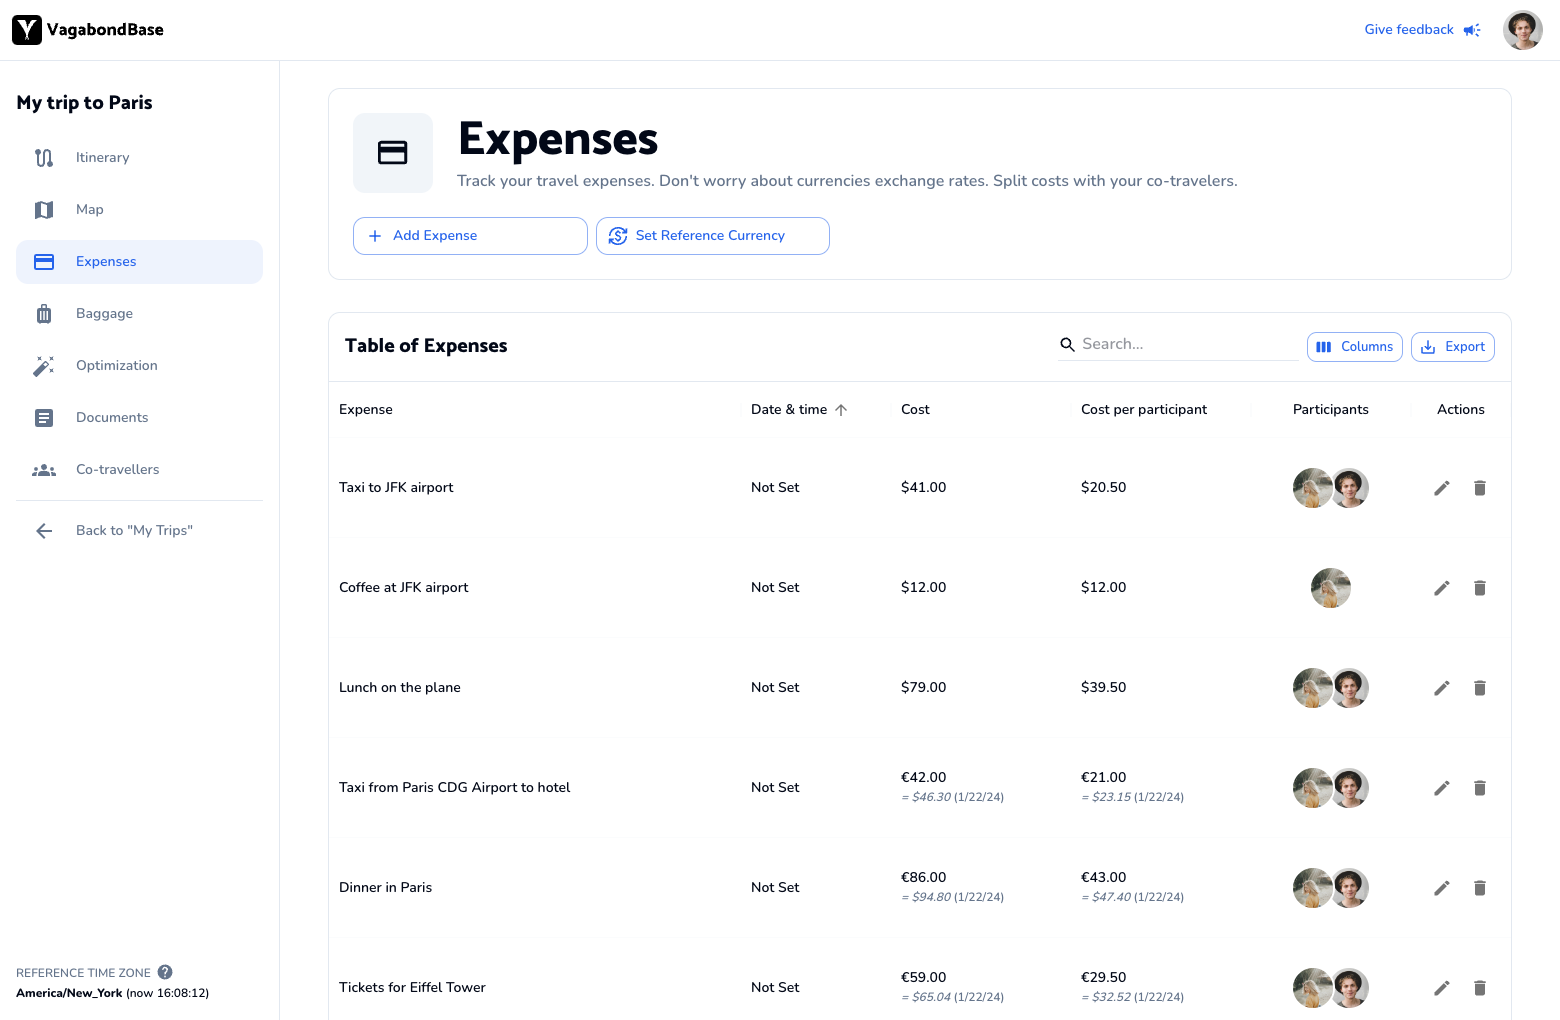 VagabondBase expenses section